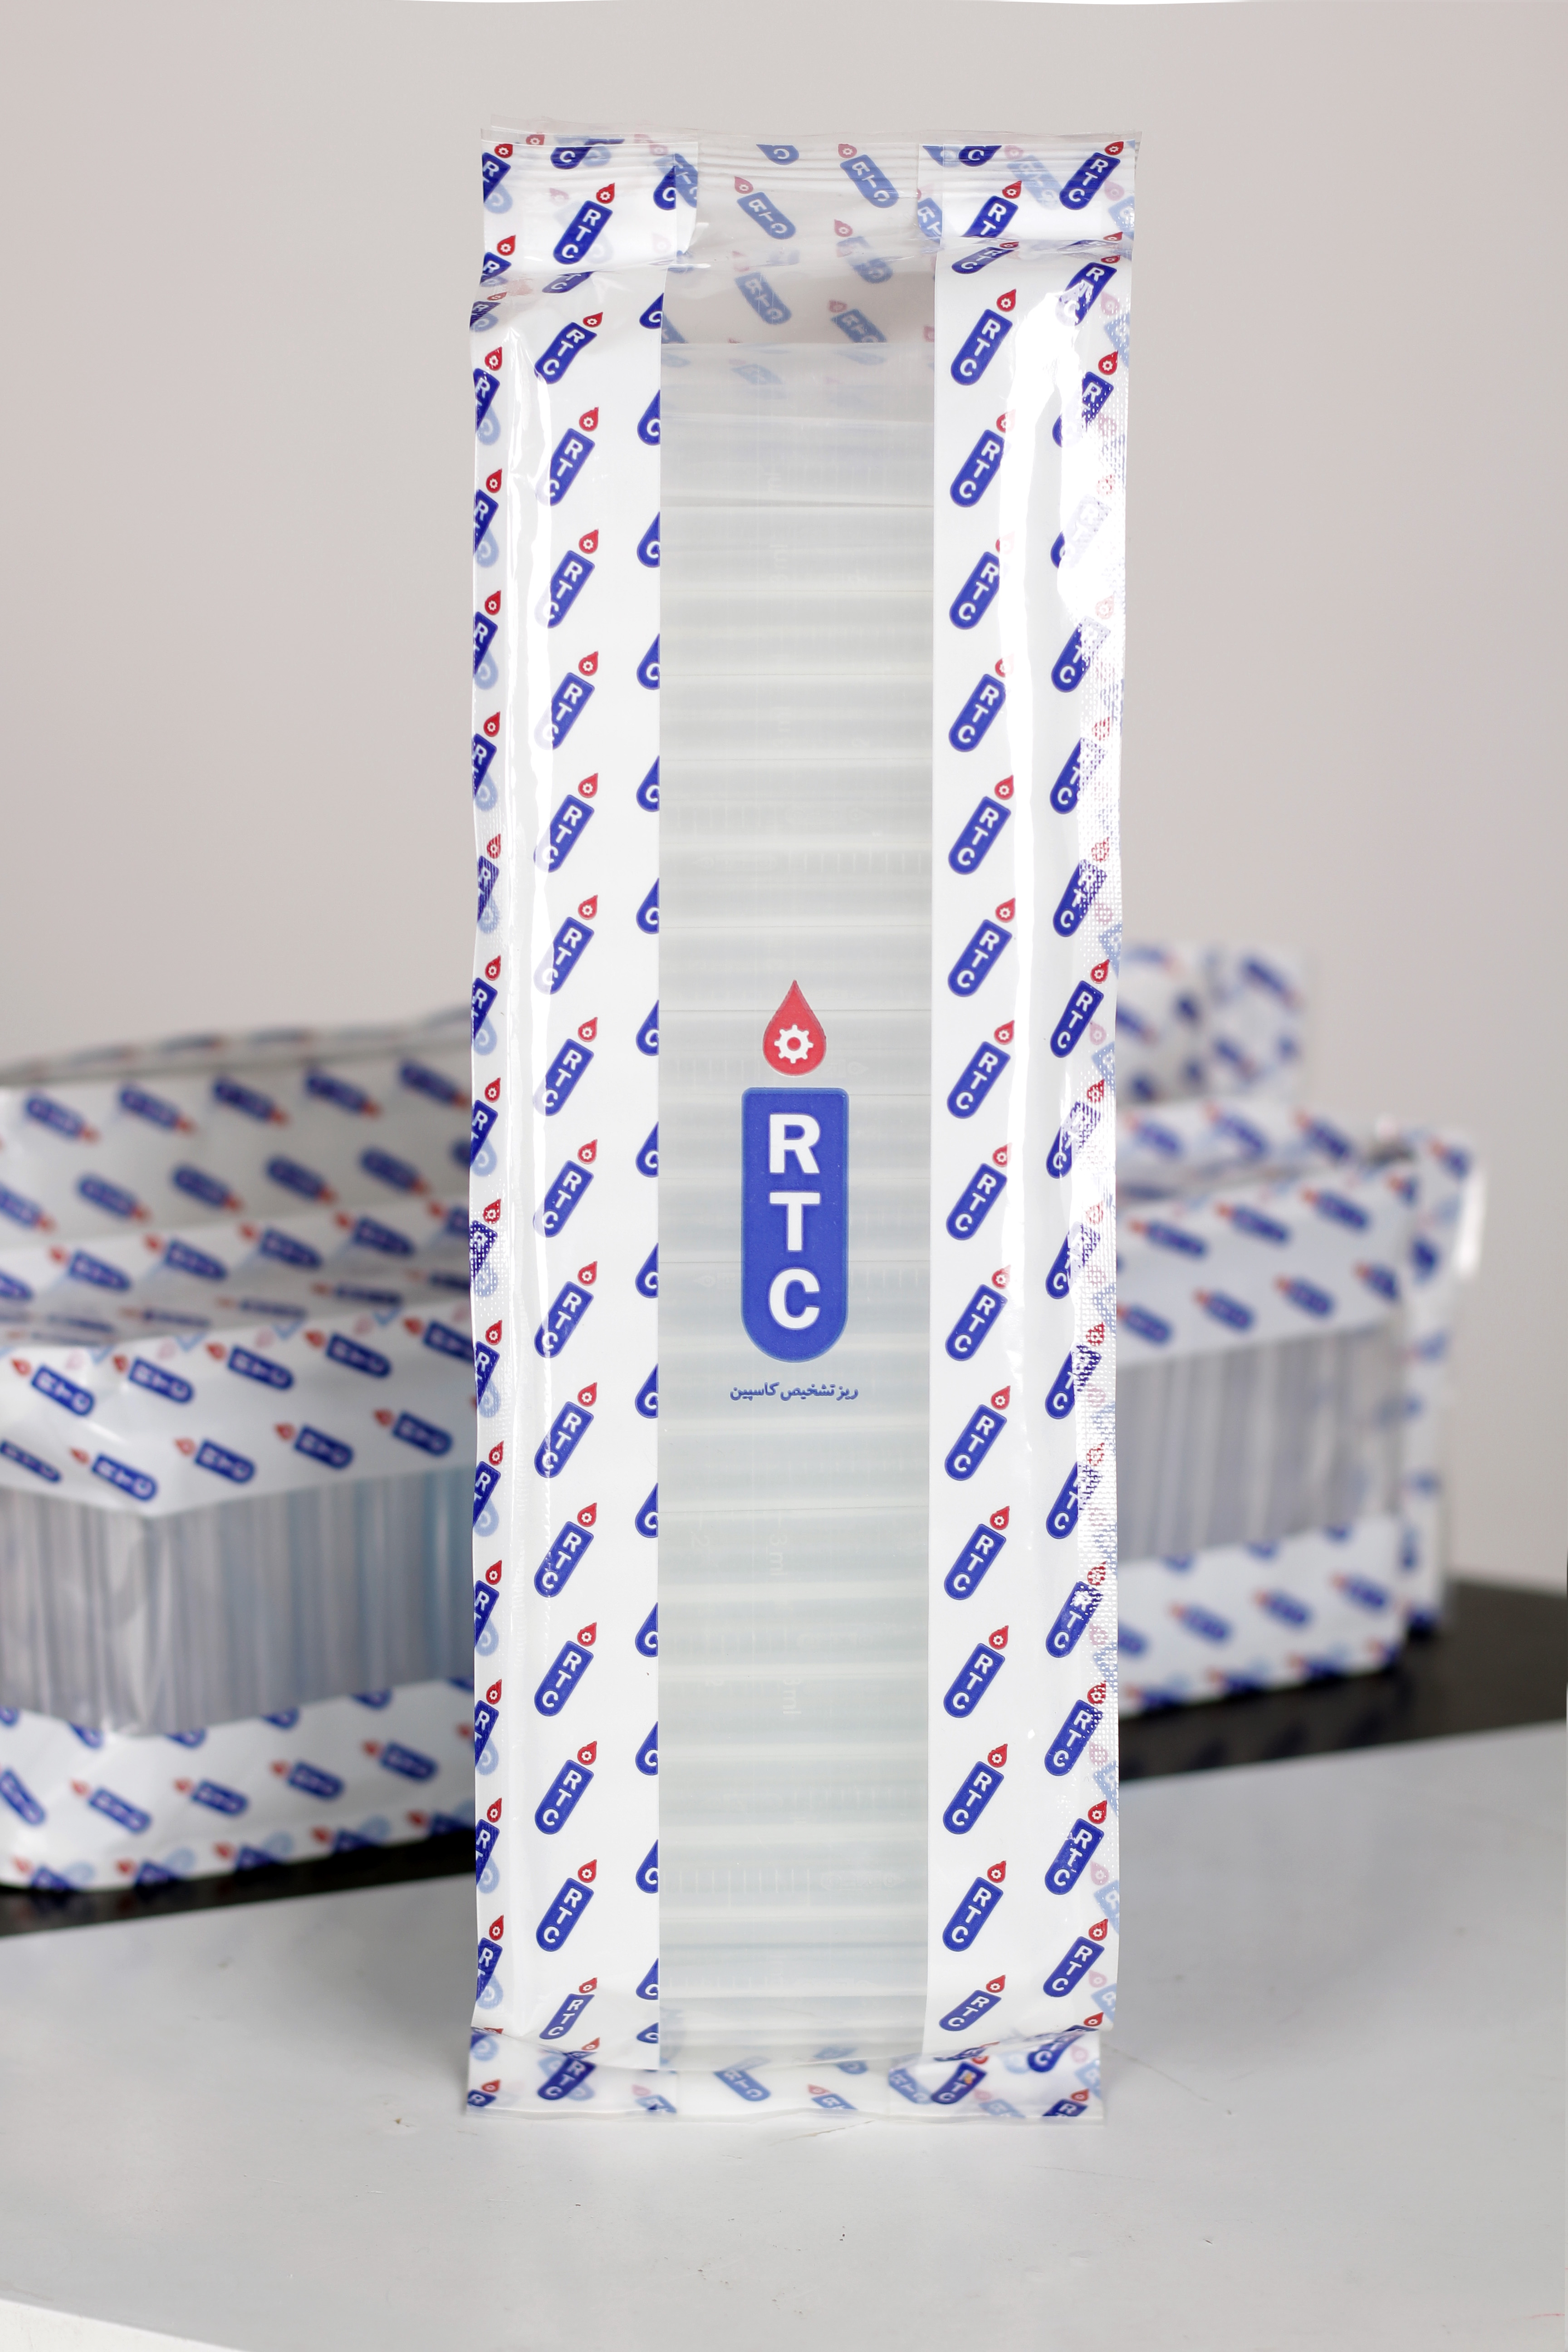 لوله خون گیری ساده غیرمدرج (مات) 13x75 - Simple Blood Collection Test Tubes PP 13x75 - RTC - مصرفی - نمونه گیری - ریز تشخیص کاسپین